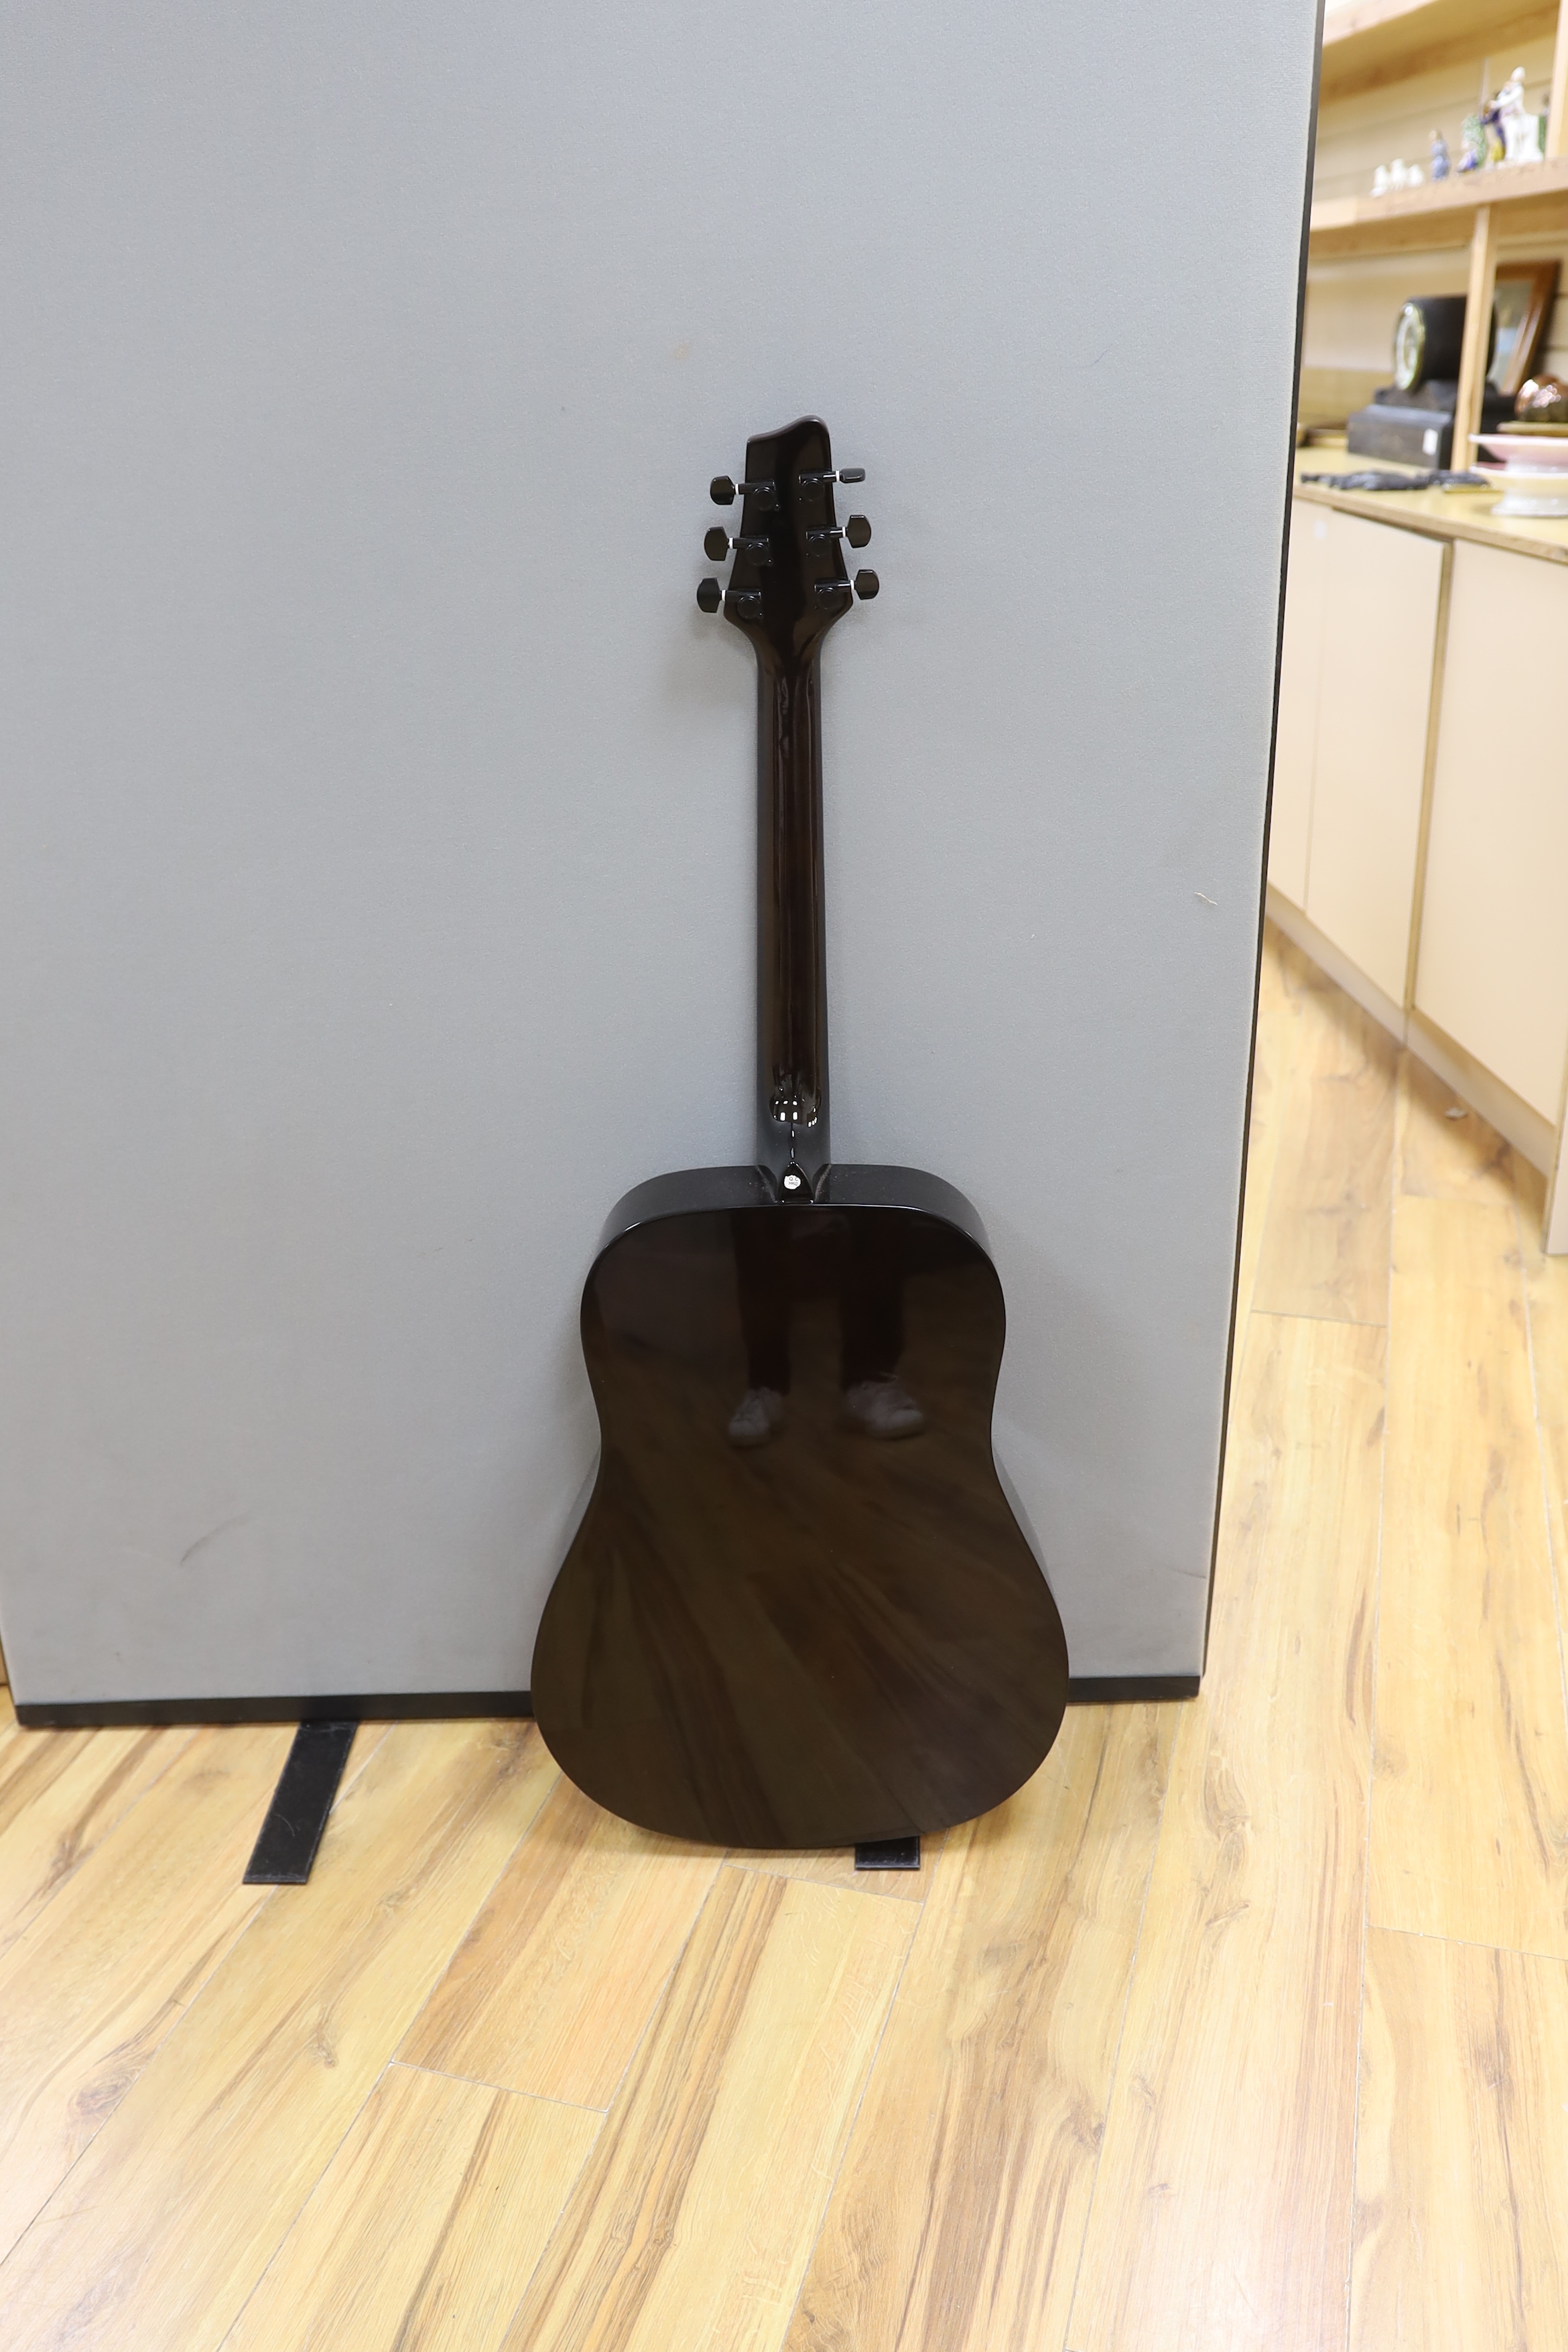 A Rockwood acoustic guitar, in case